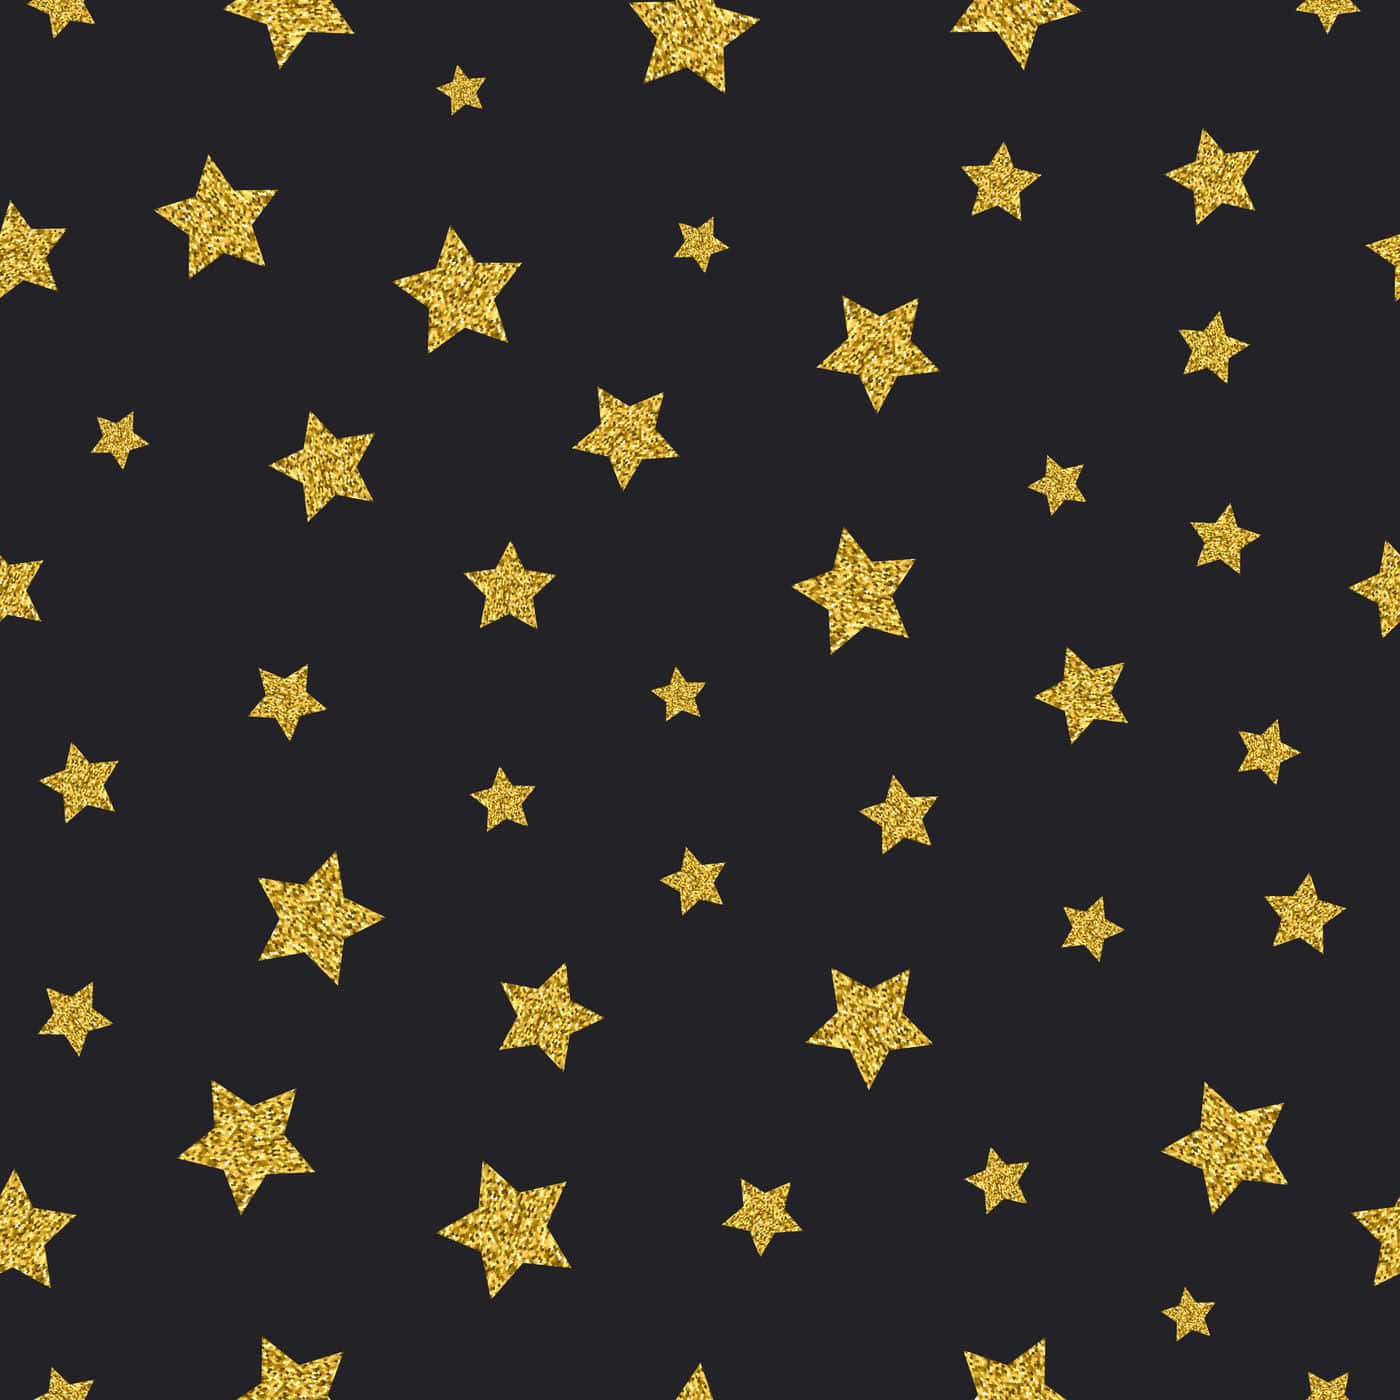 An Elegant Gold Star Background